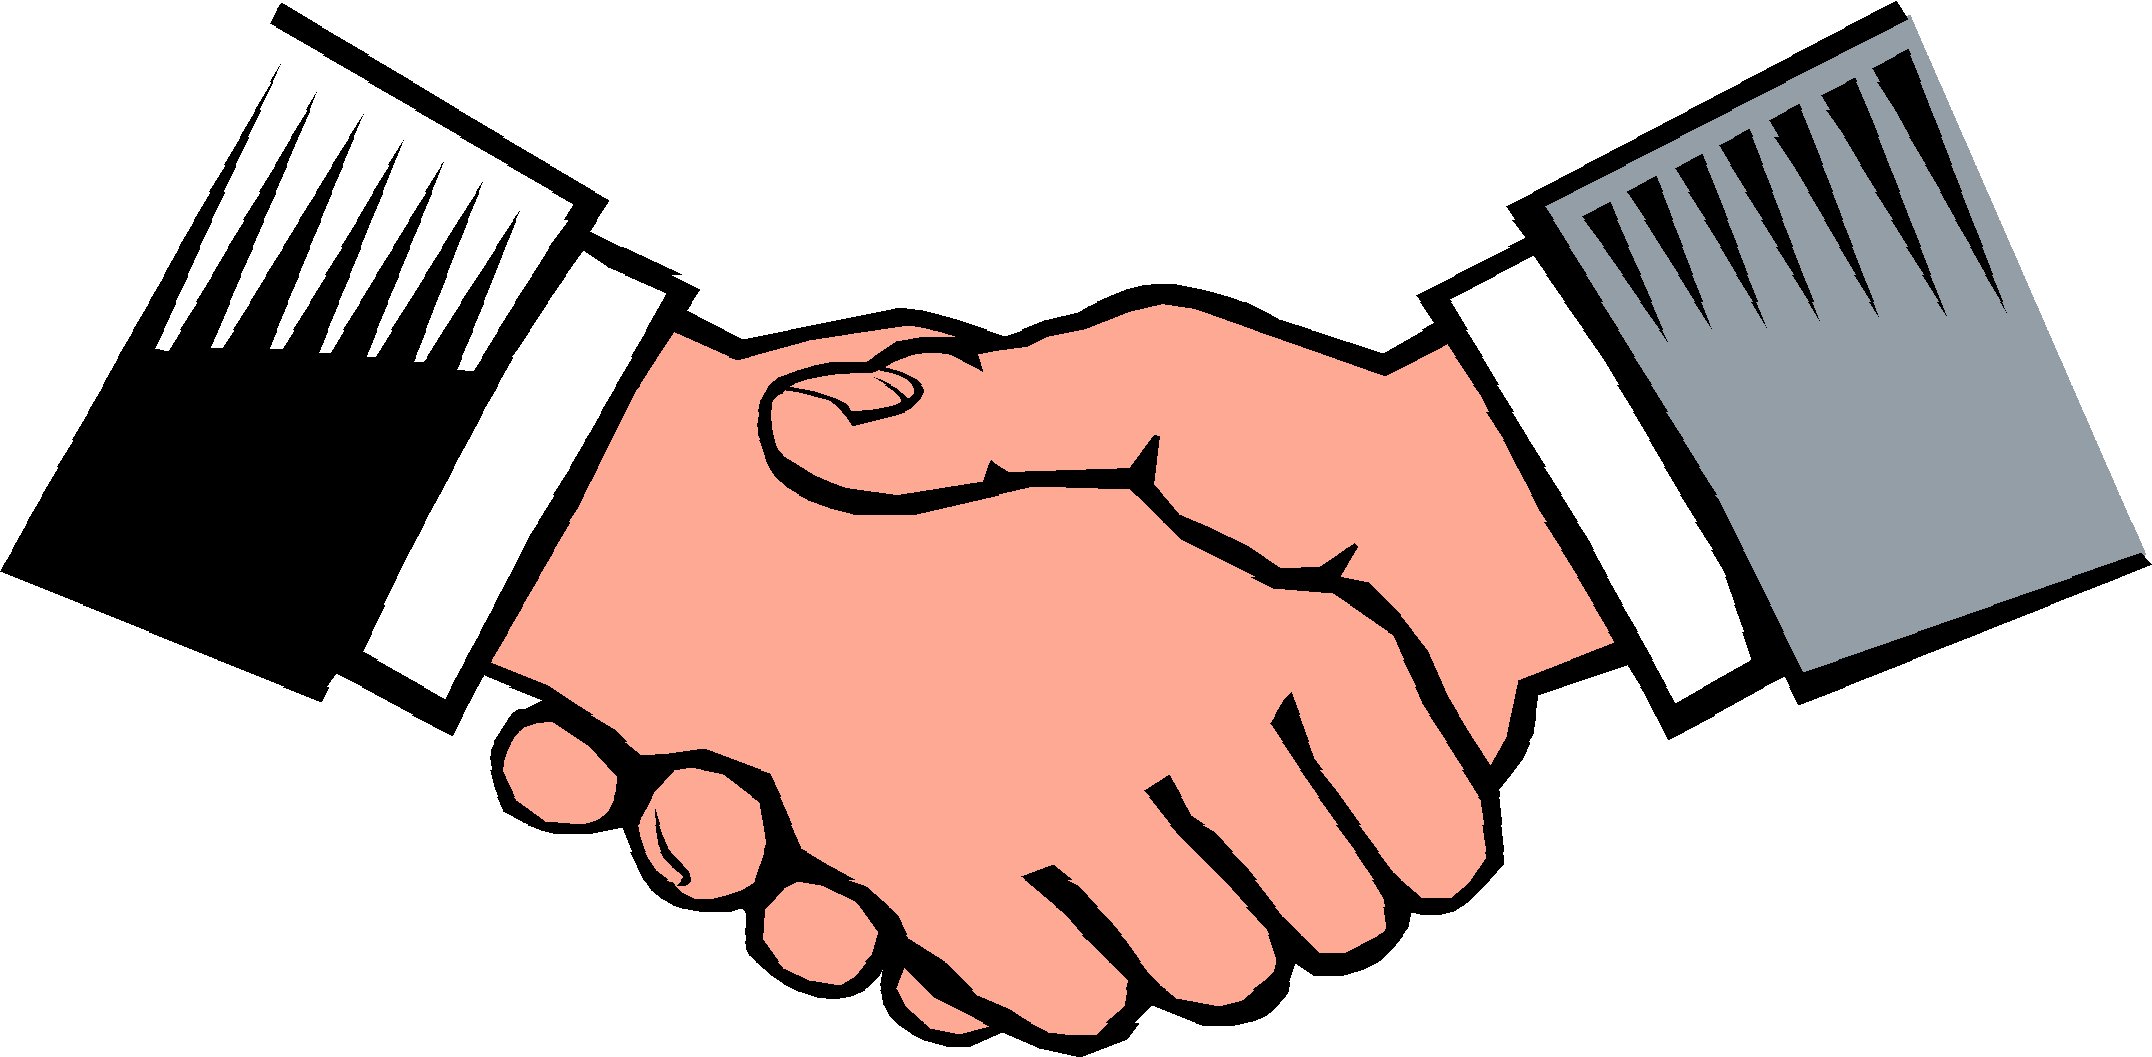 handshake logo clipart designs